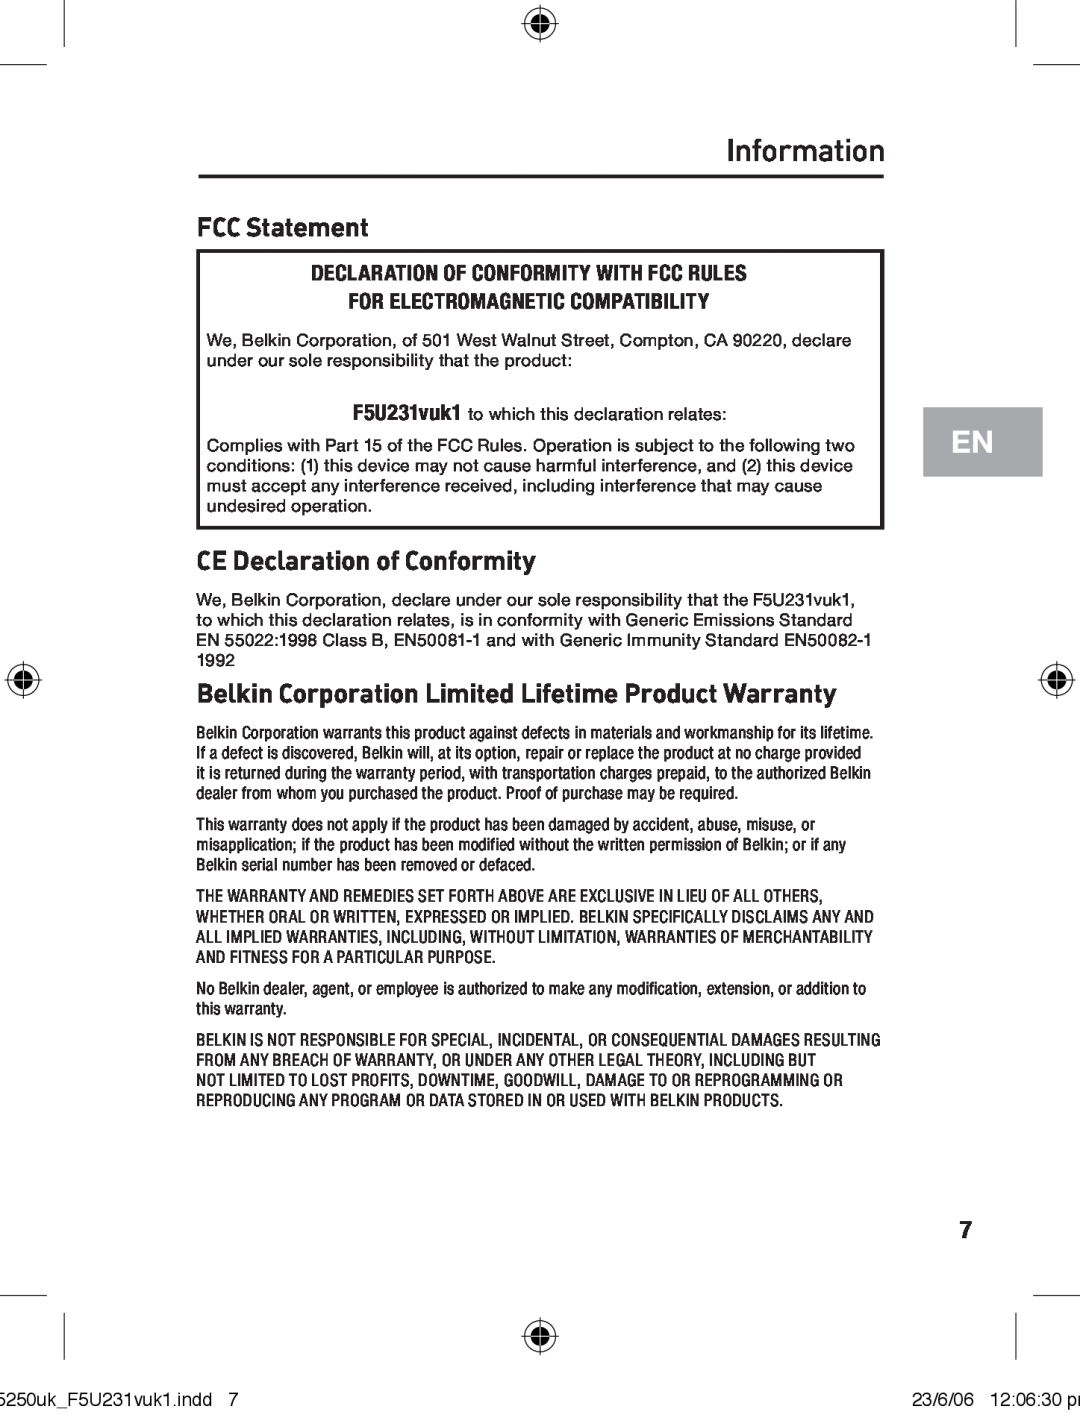 Belkin F5U231VUKI user manual Information, FCC Statement, CE Declaration of Conformity 